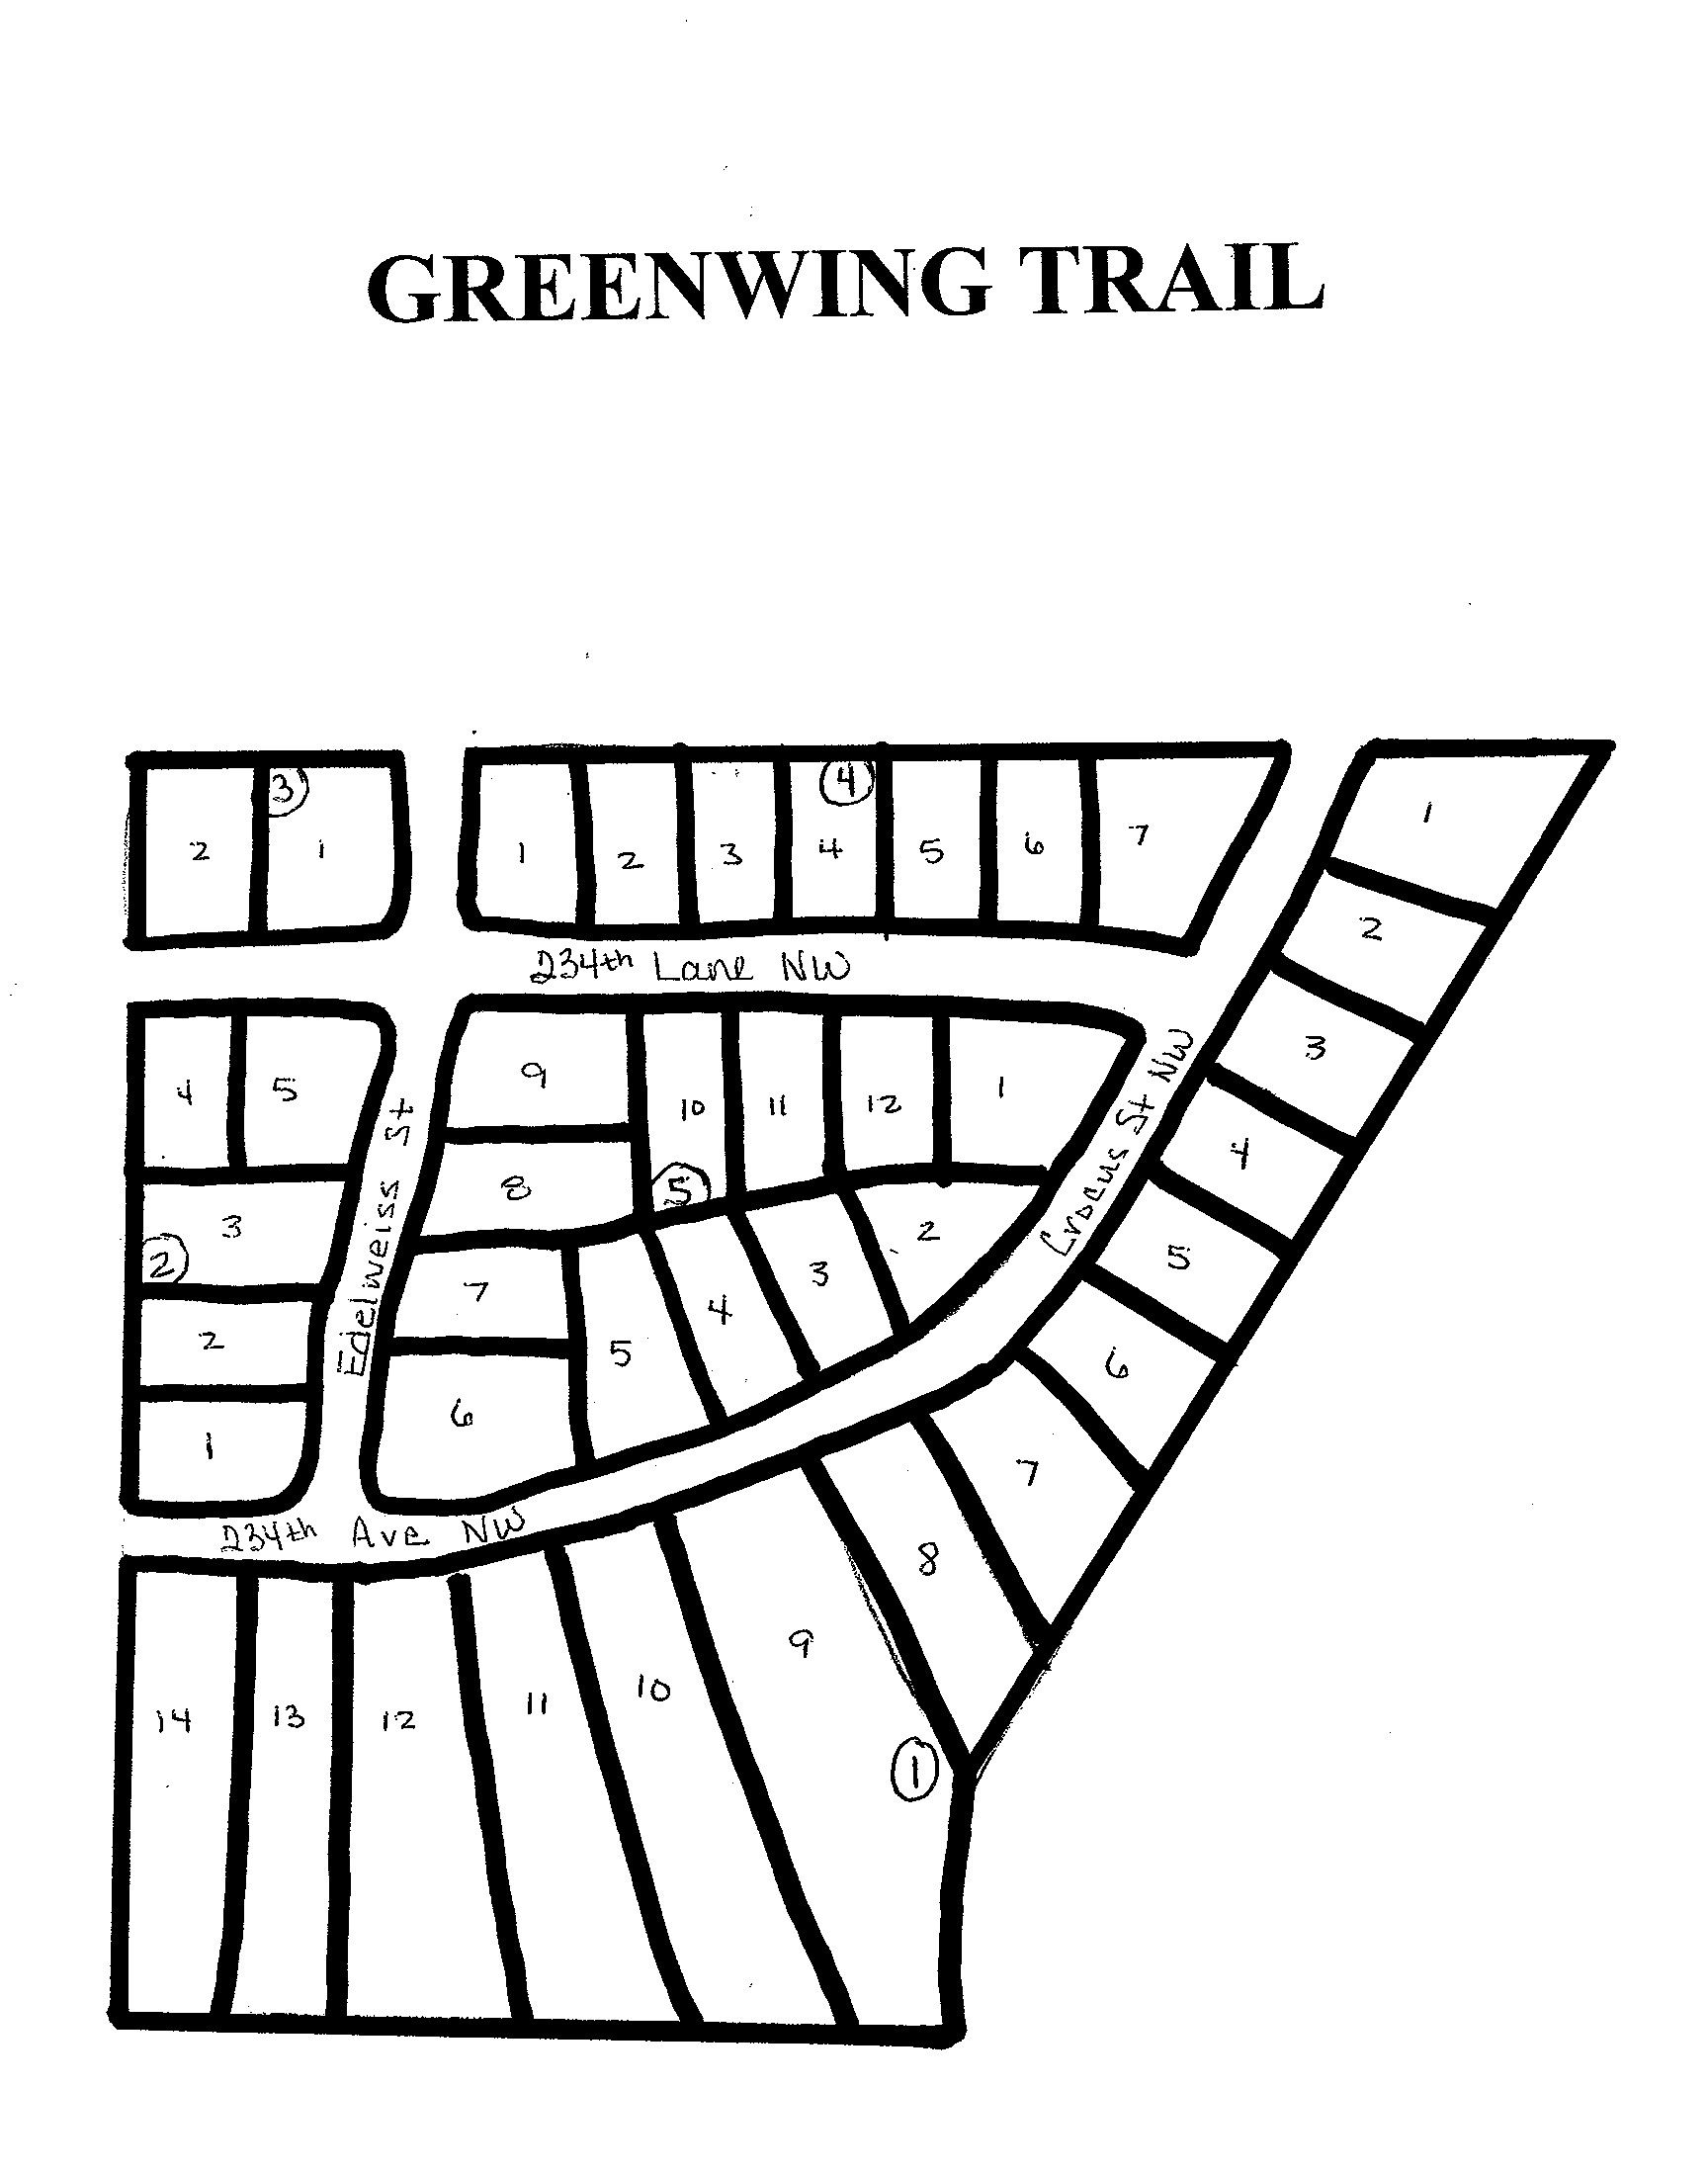 Greenwing Trail,55070